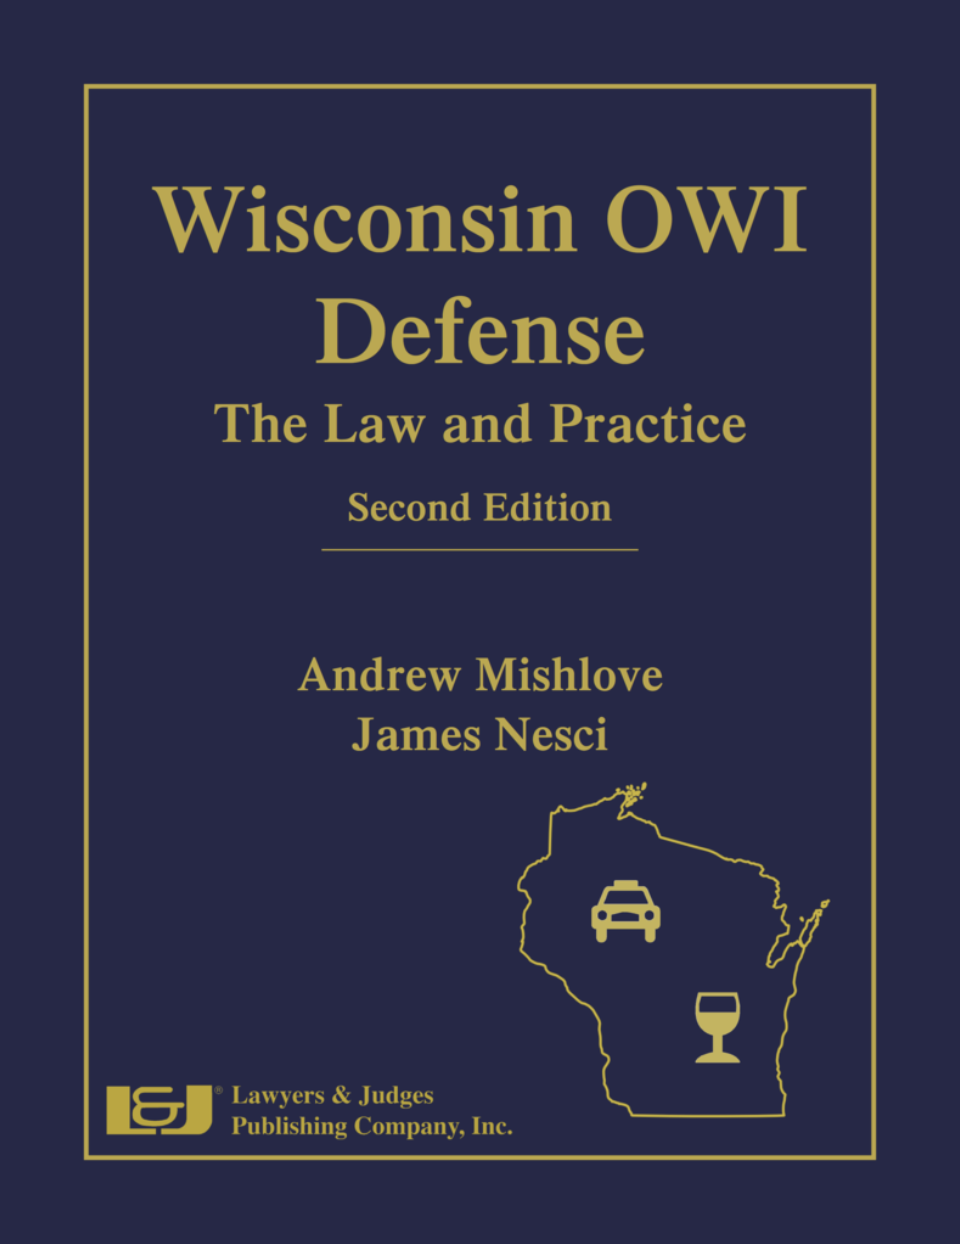 Mishlove & Stuckert, LLC Attorneys at Law | Milwaukee, WI Mishlove & Stuckert, LLC Attorneys at Law Milwaukee (414)332-3499